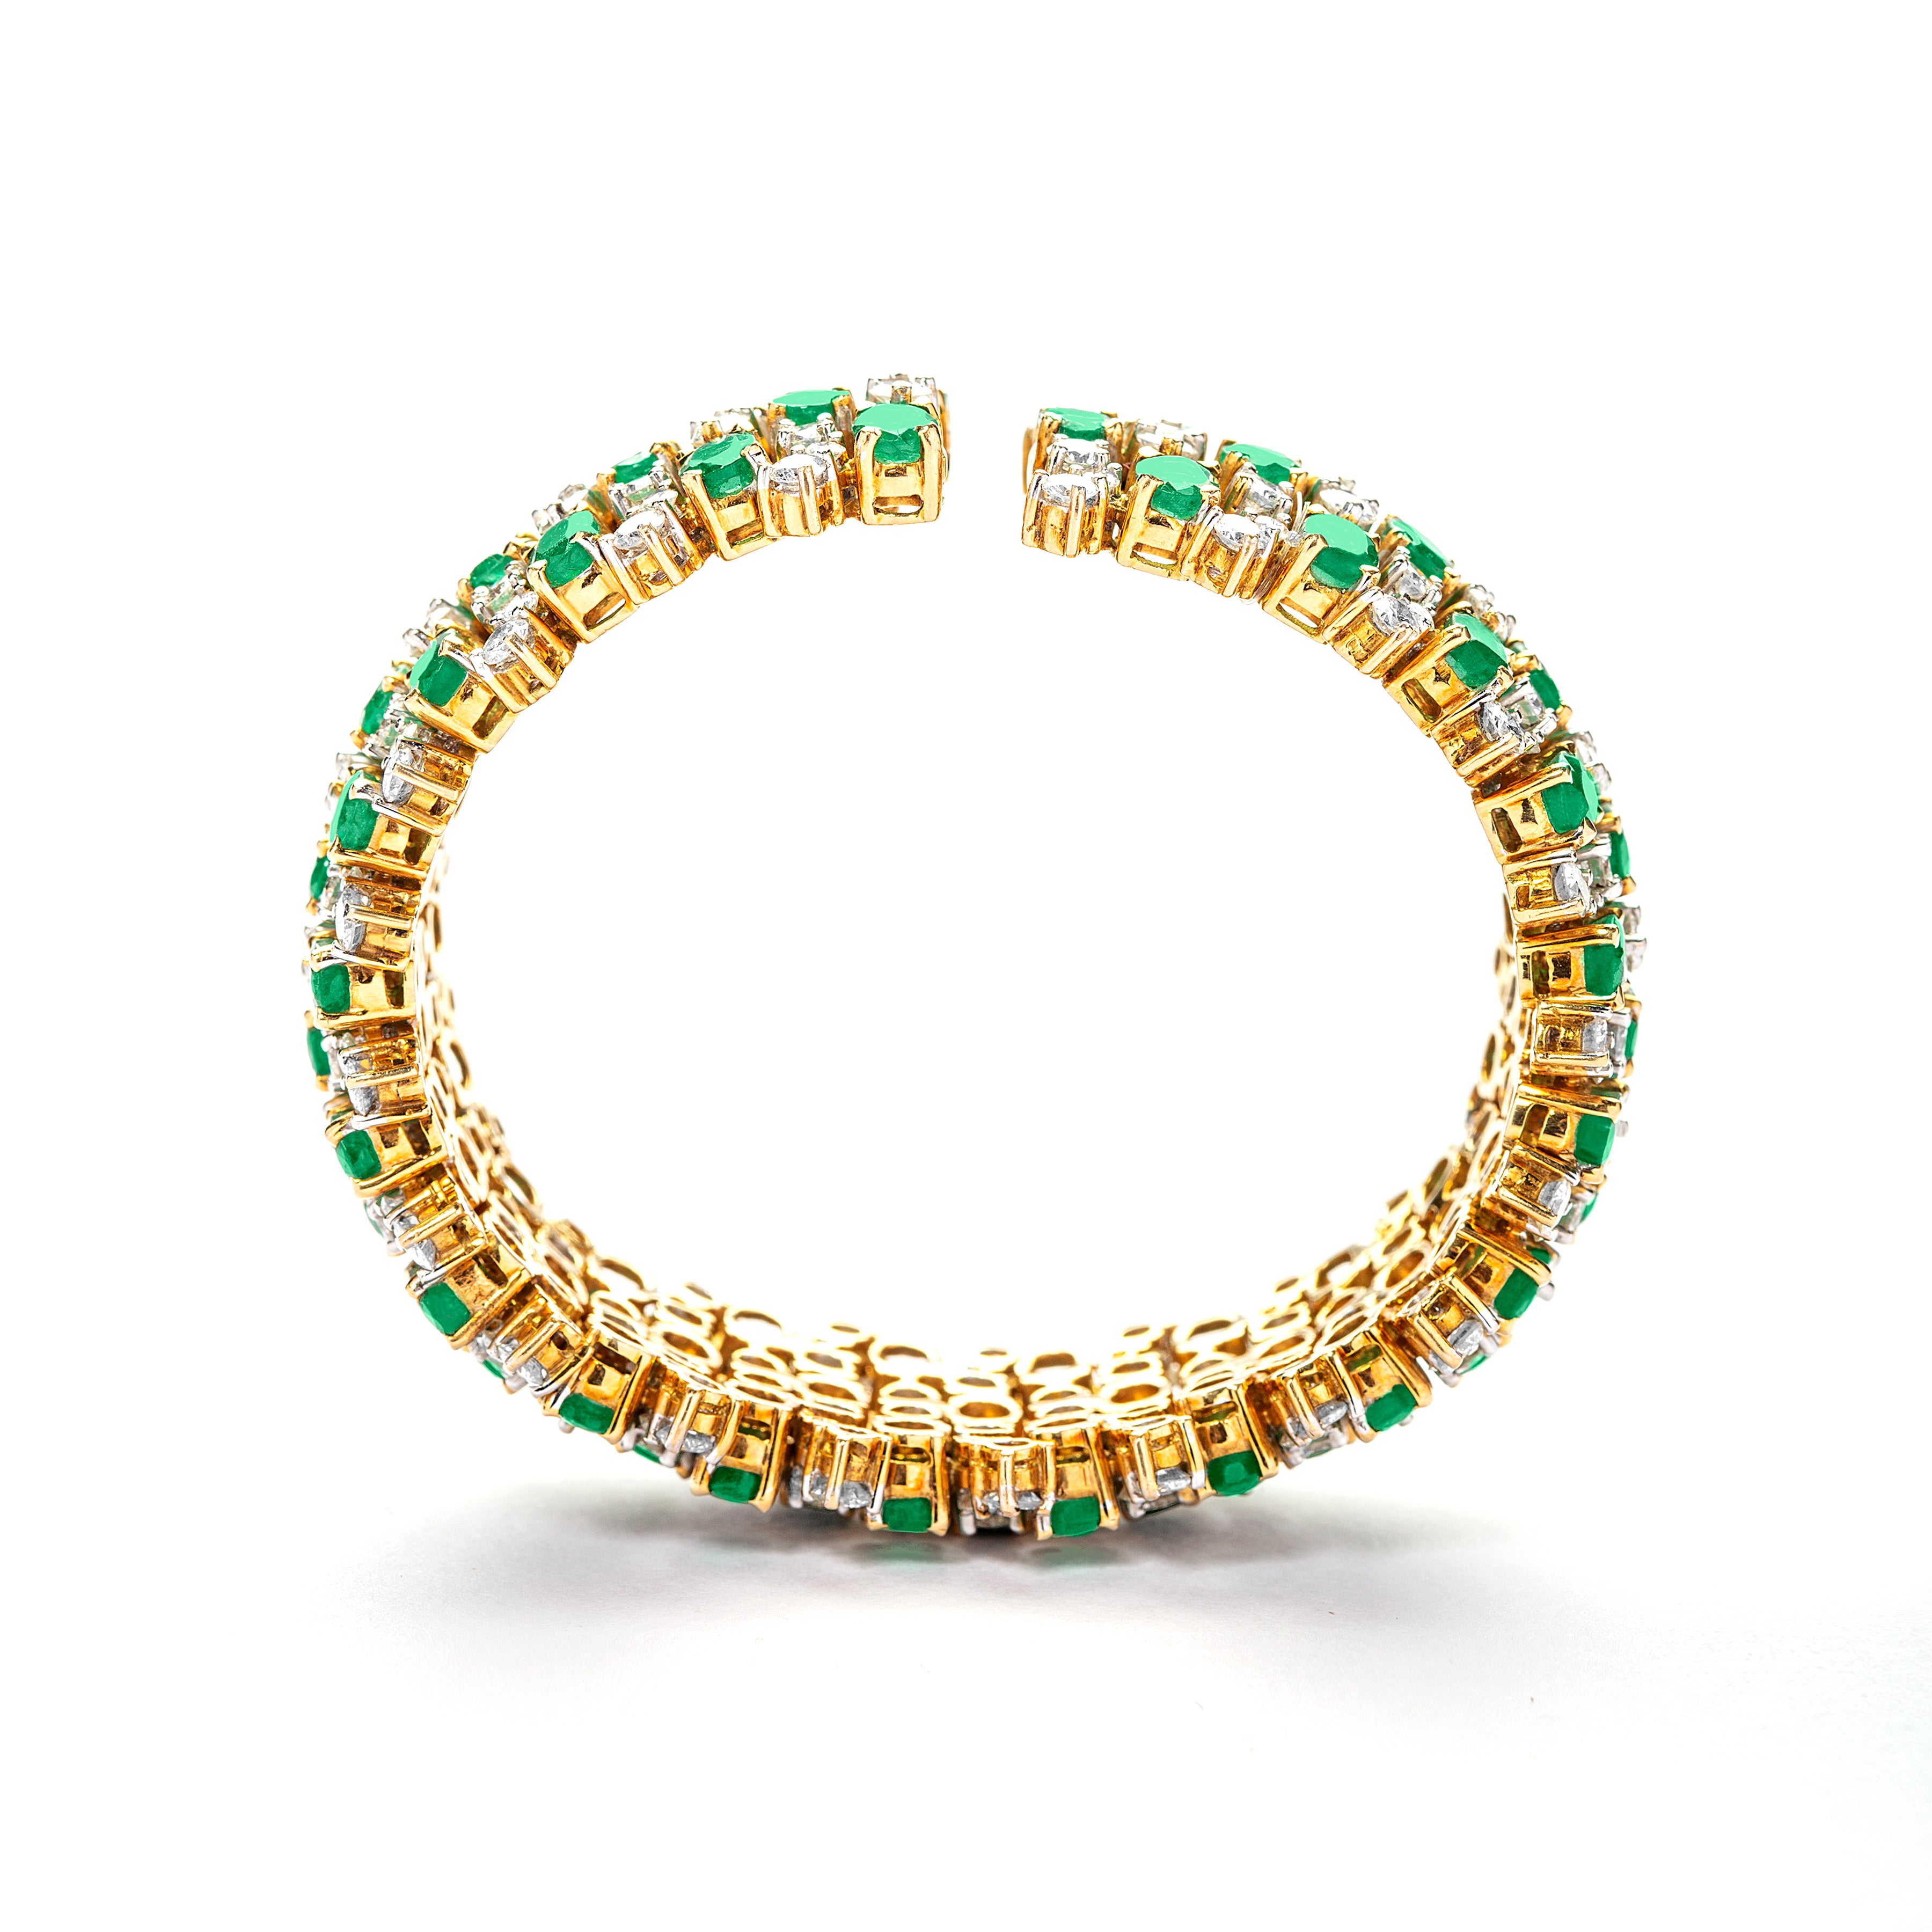 Emerald and Diamonds bracelet in 18 karat gold by fine jewelry designer ESTAA